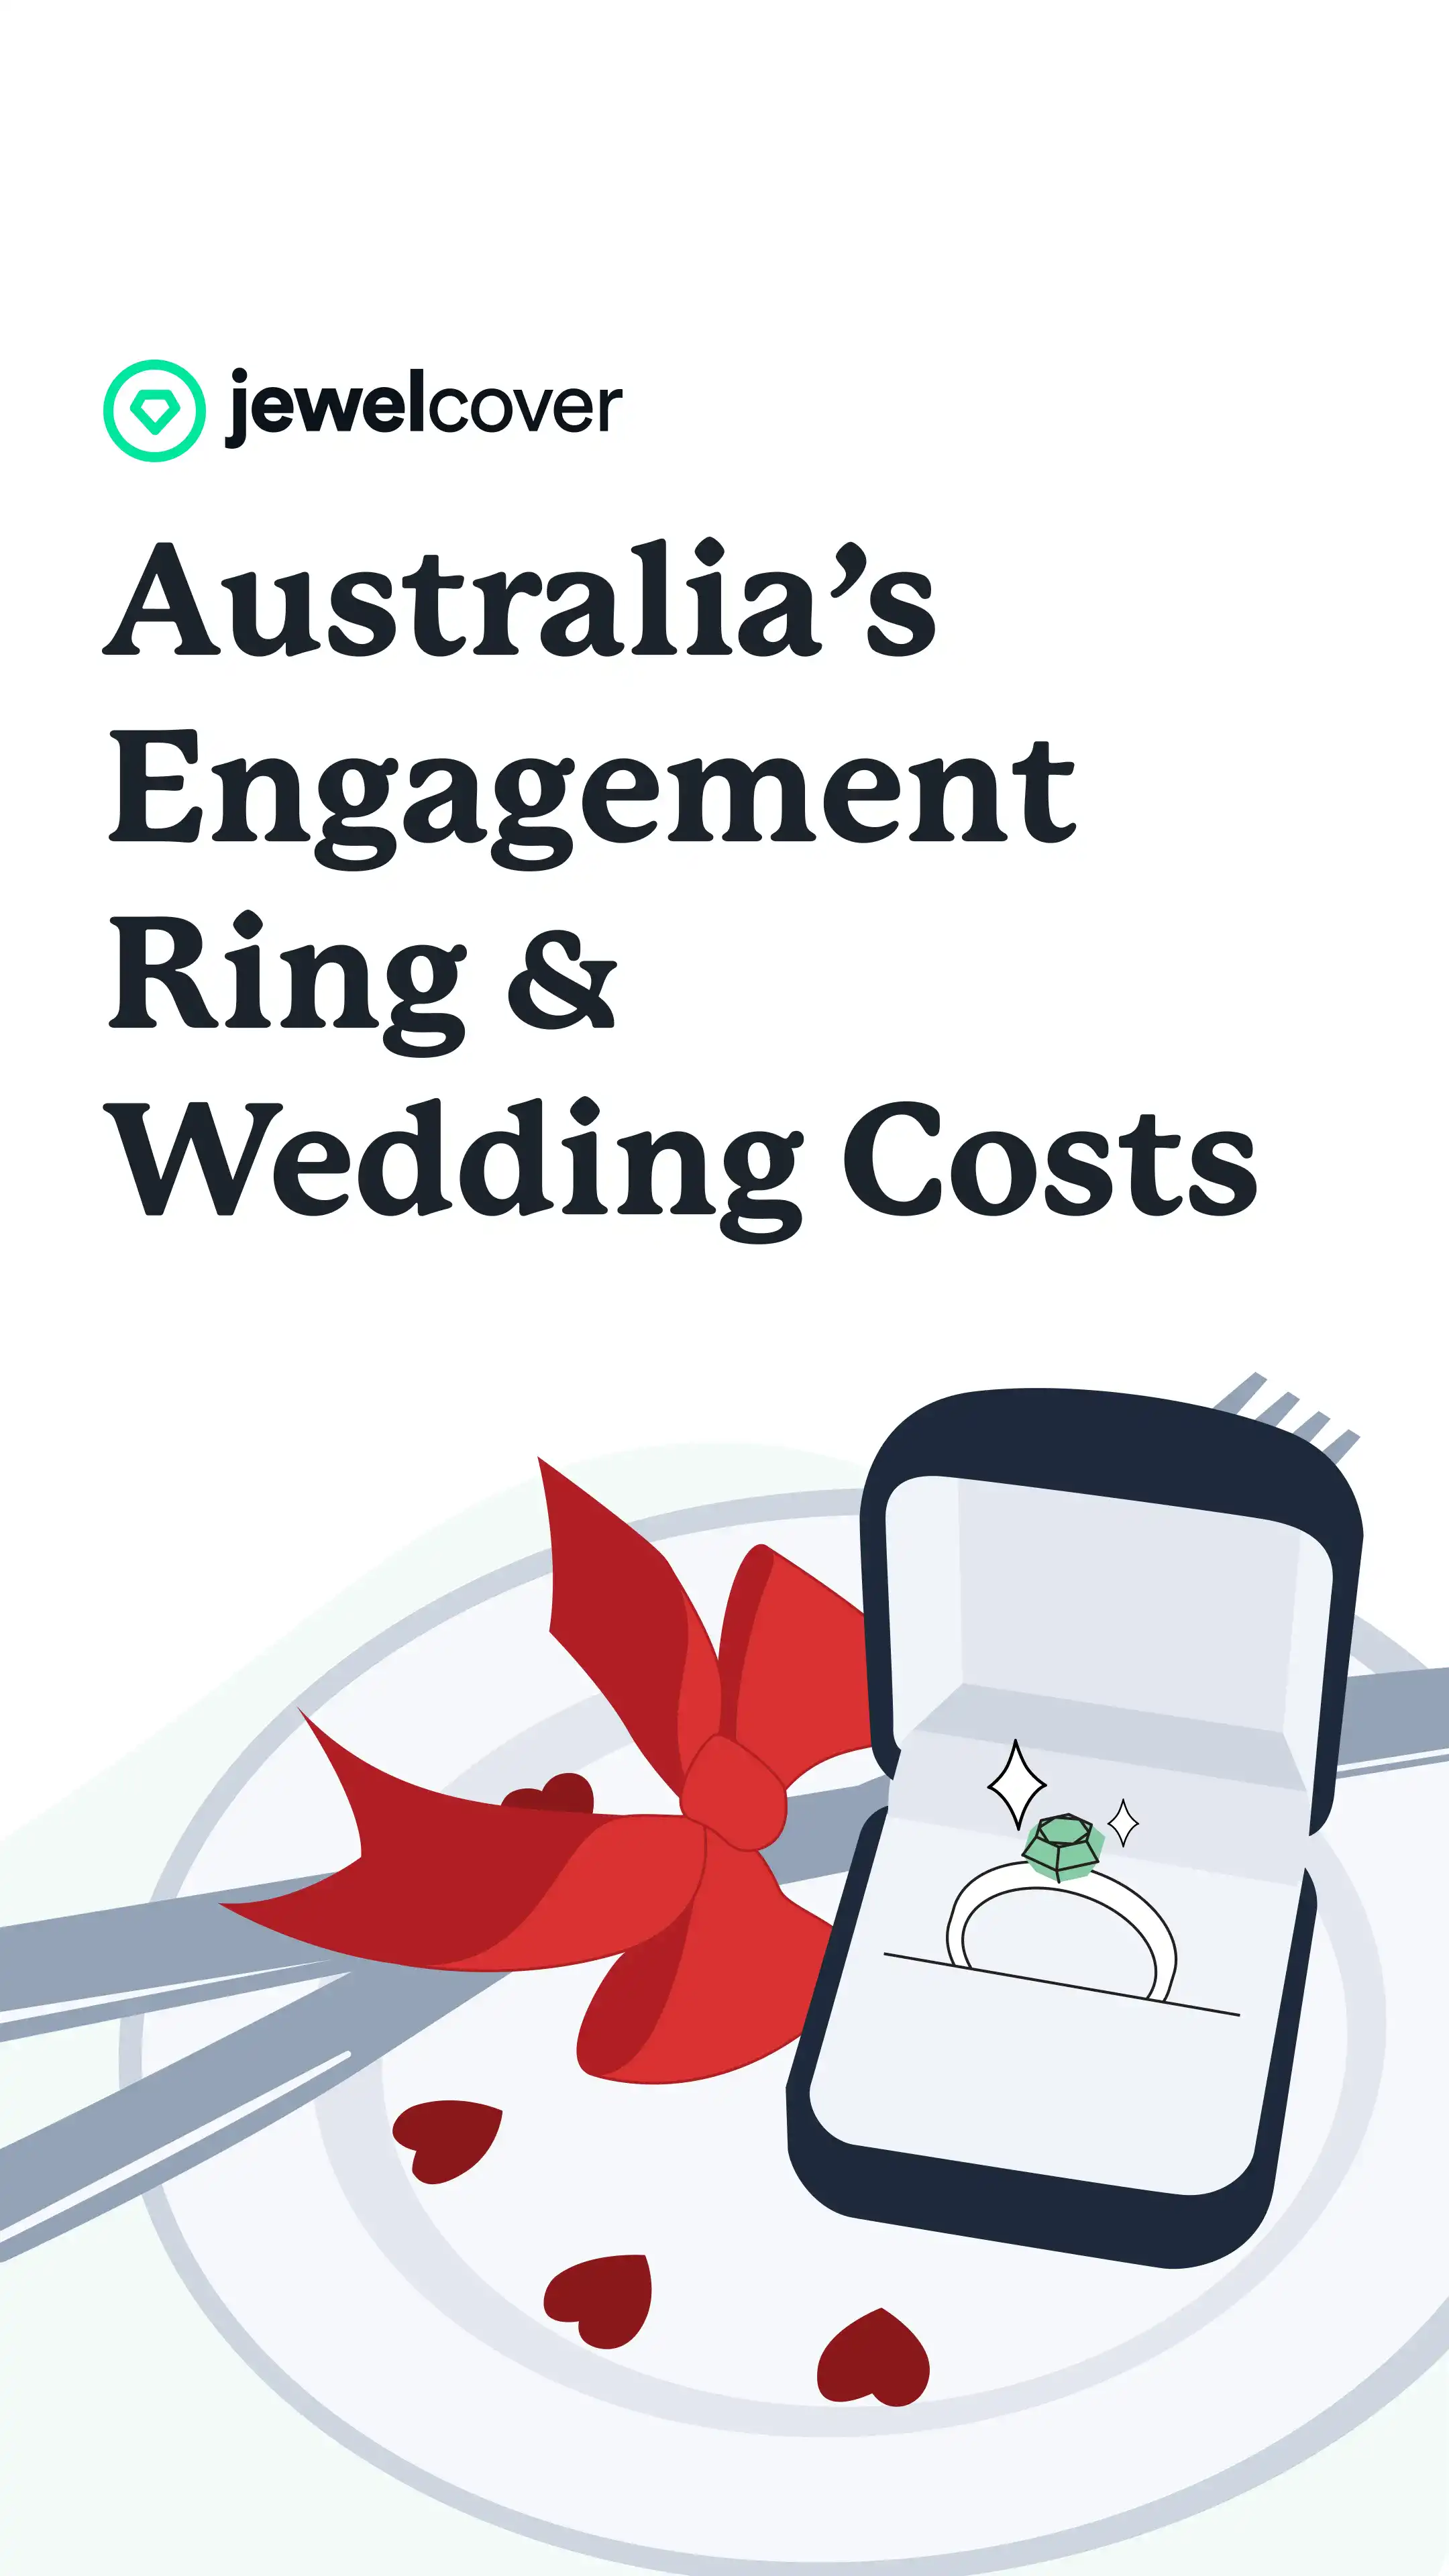 Australia’s Average Engagement Ring & Wedding Costs